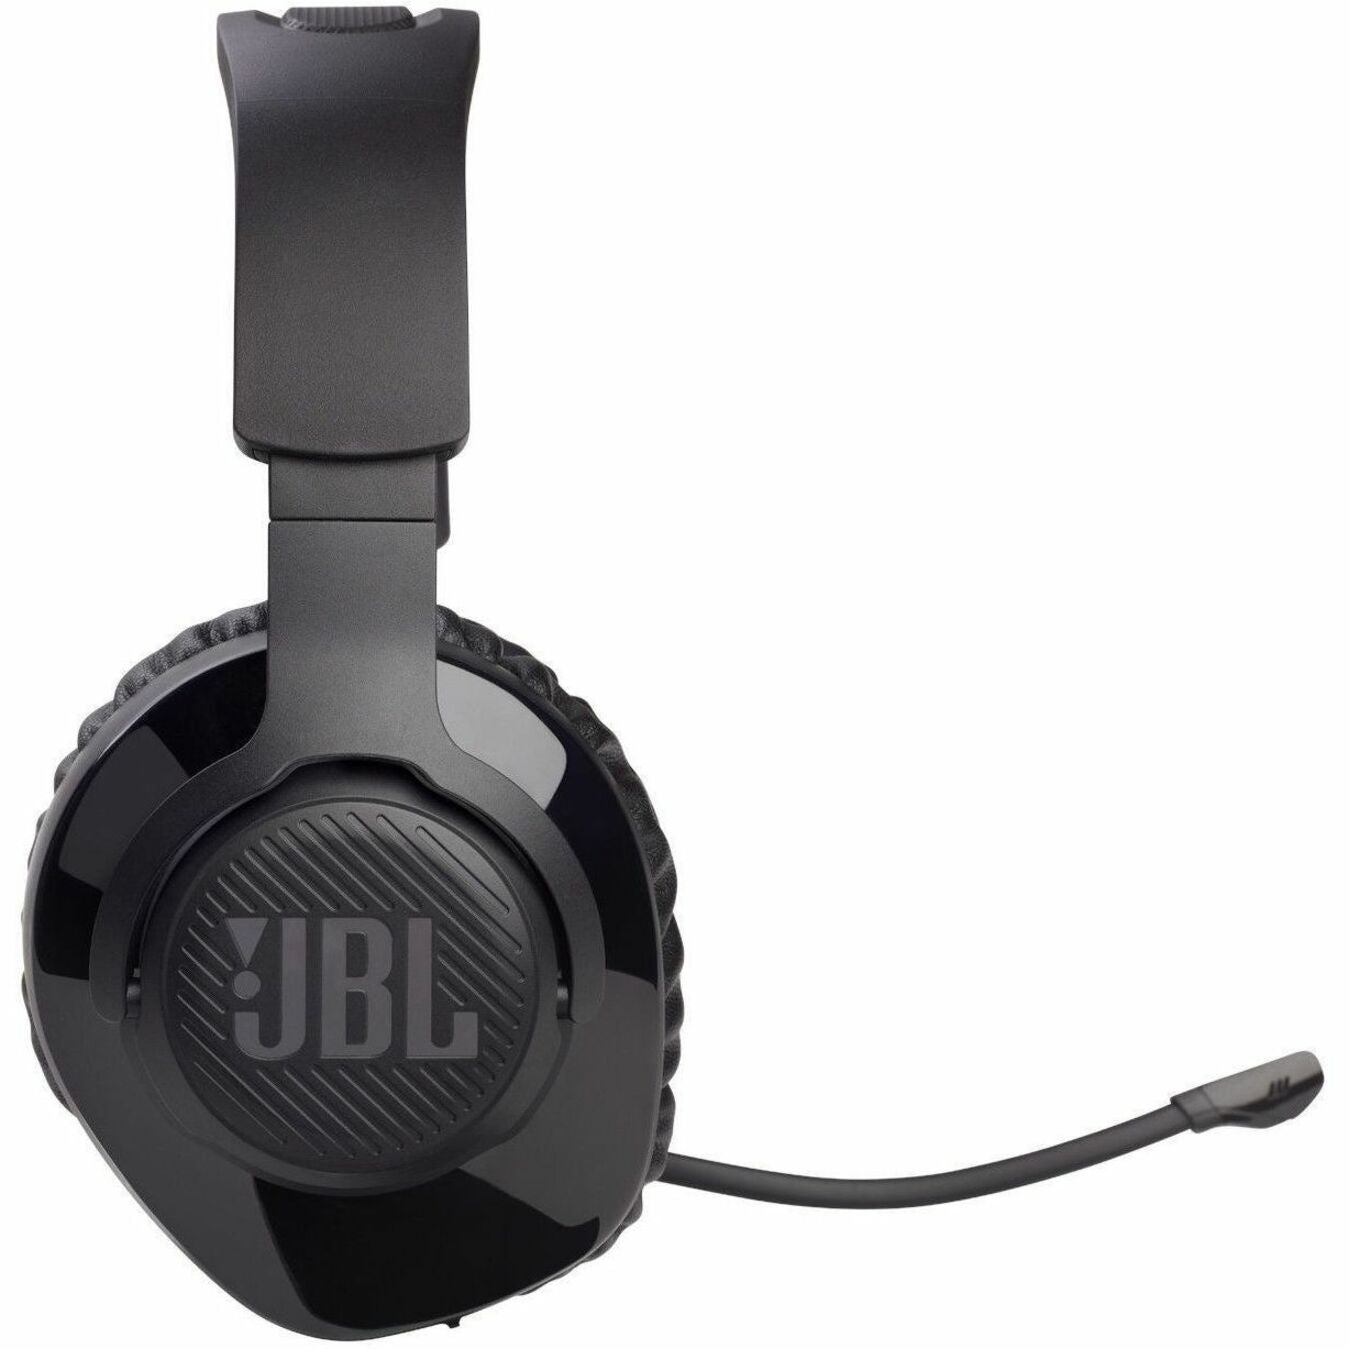 JBL JBL-Q350WLBLKAM Quantum 350 Wireless Gaming Headset, Comfortable, Rechargeable Battery, QuantumSound, Fast Charging, Lightweight, Equalizer, Sidetone, QuantumSURROUND, RGB Light